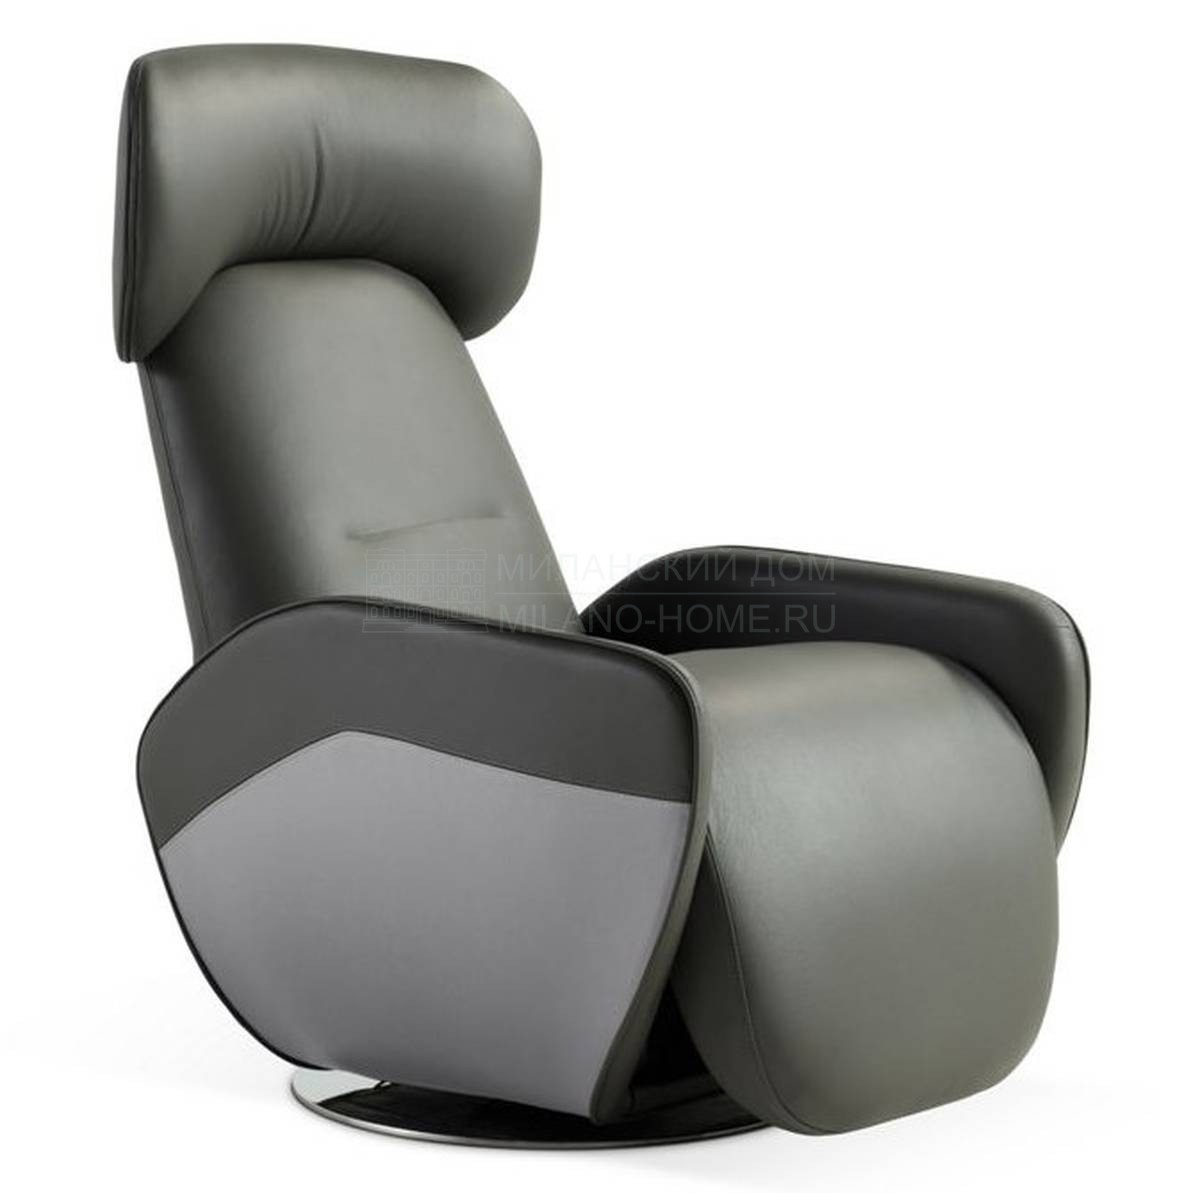 Кожаное кресло Falcon pivoting armchair из Франции фабрики ROCHE BOBOIS